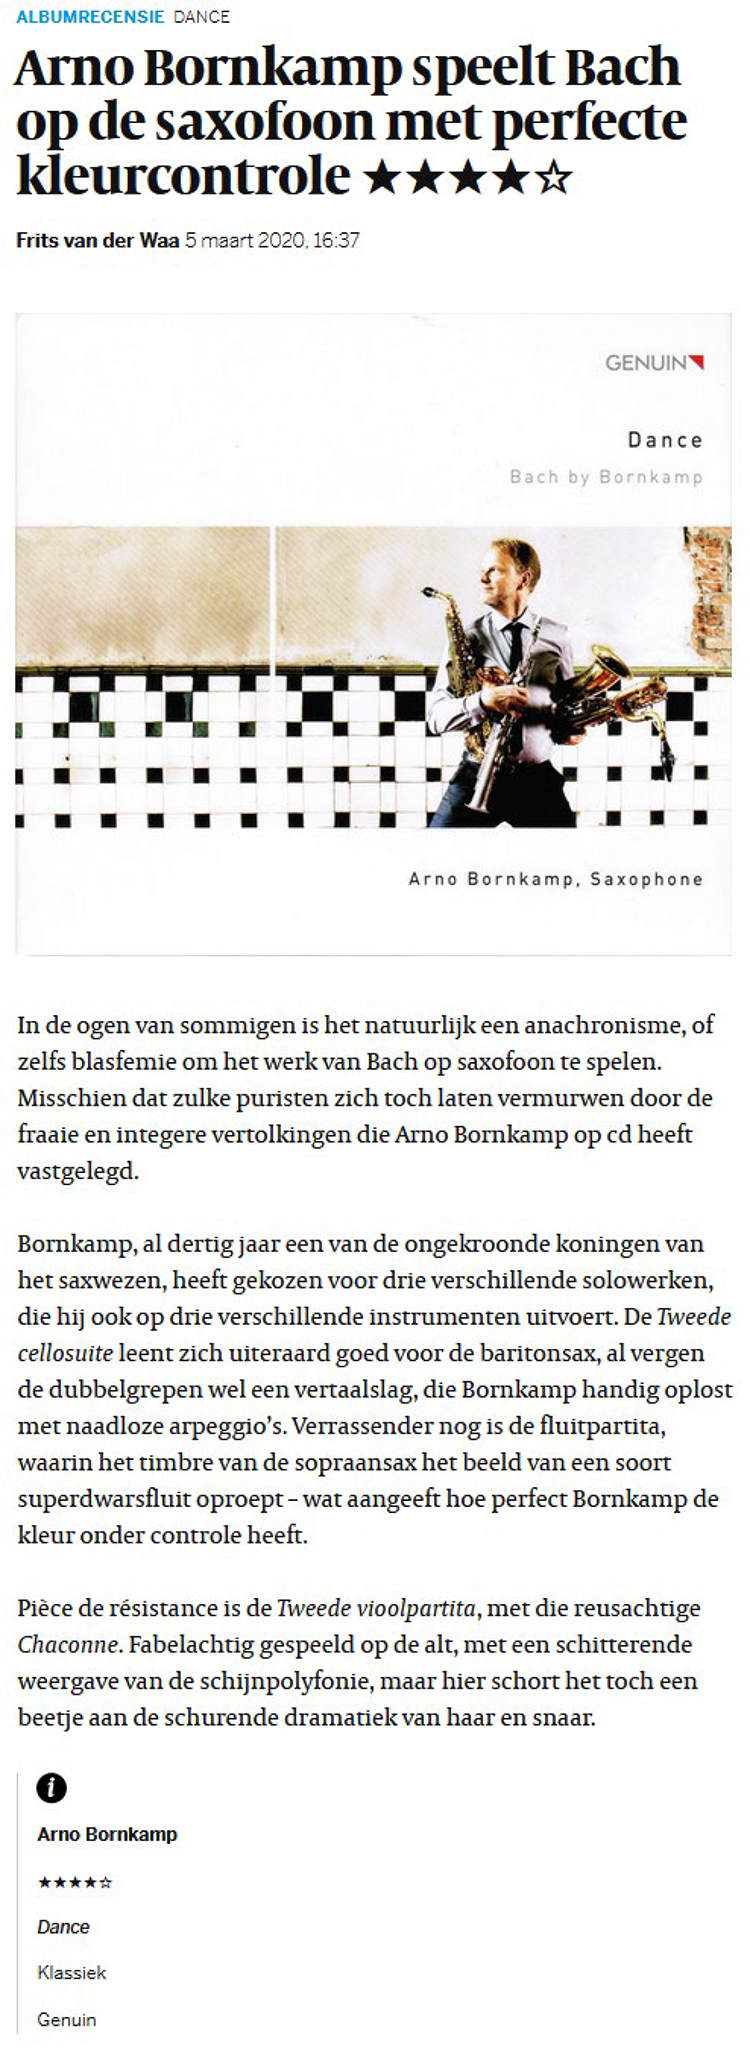 Larsson Saxophone Concerto 12.pdf